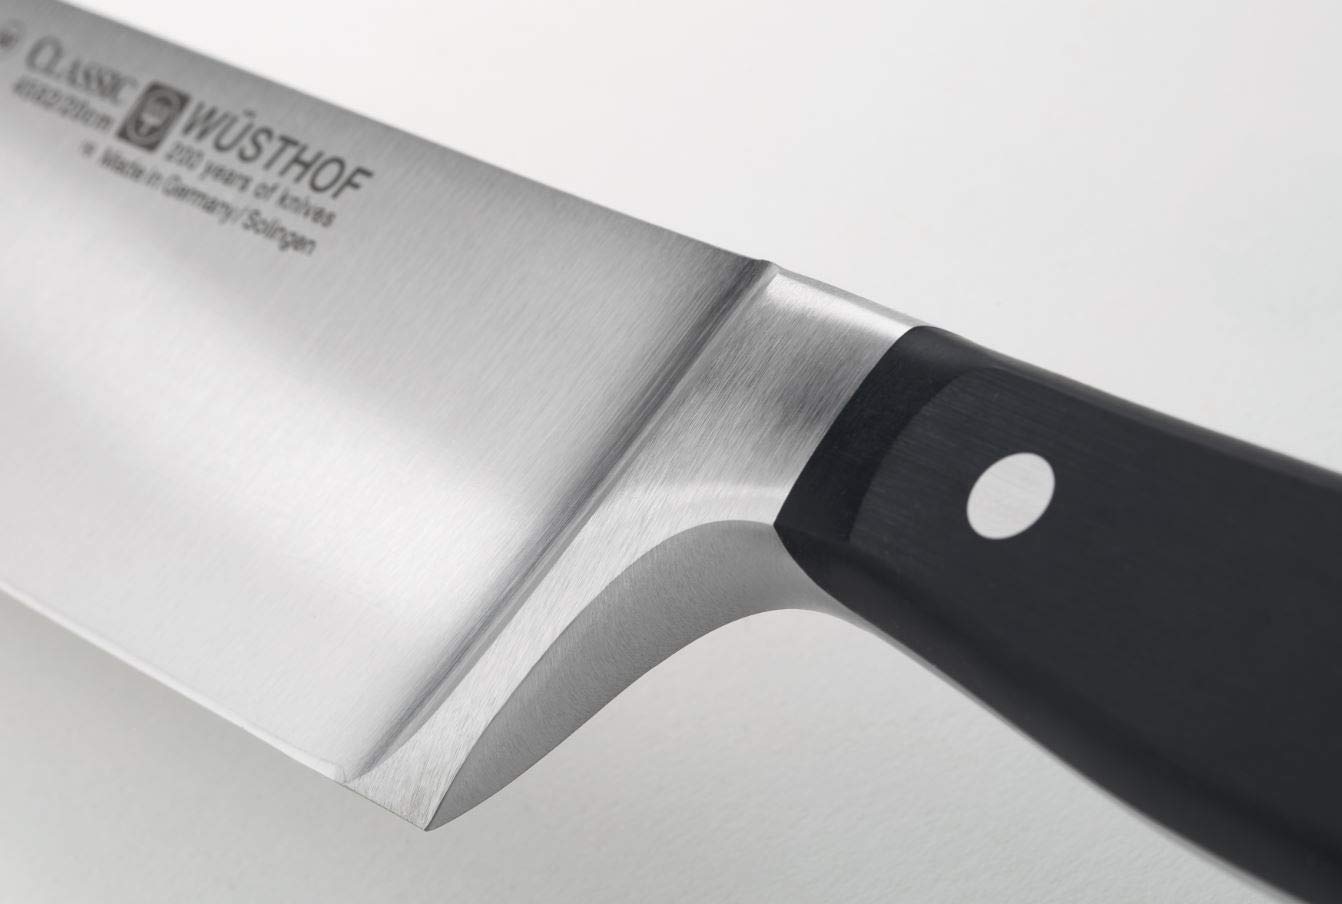 Wusthof Classic Boning Knife, 5-Inch, Black/Silver